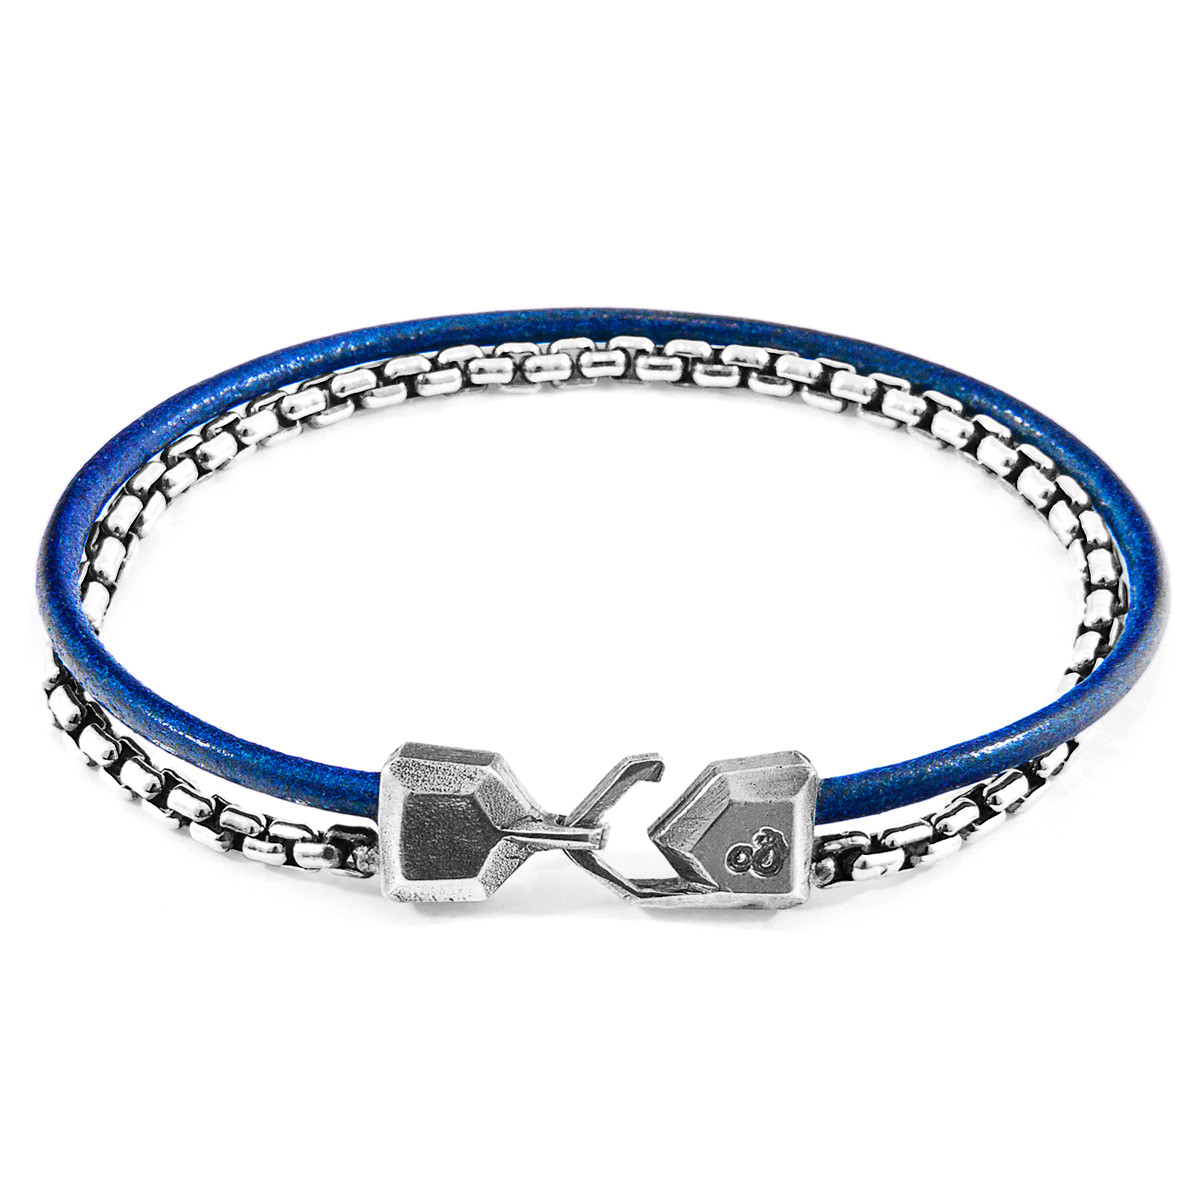 Azure Blue Moonraker Mast Silver and Round Leather Bracelet